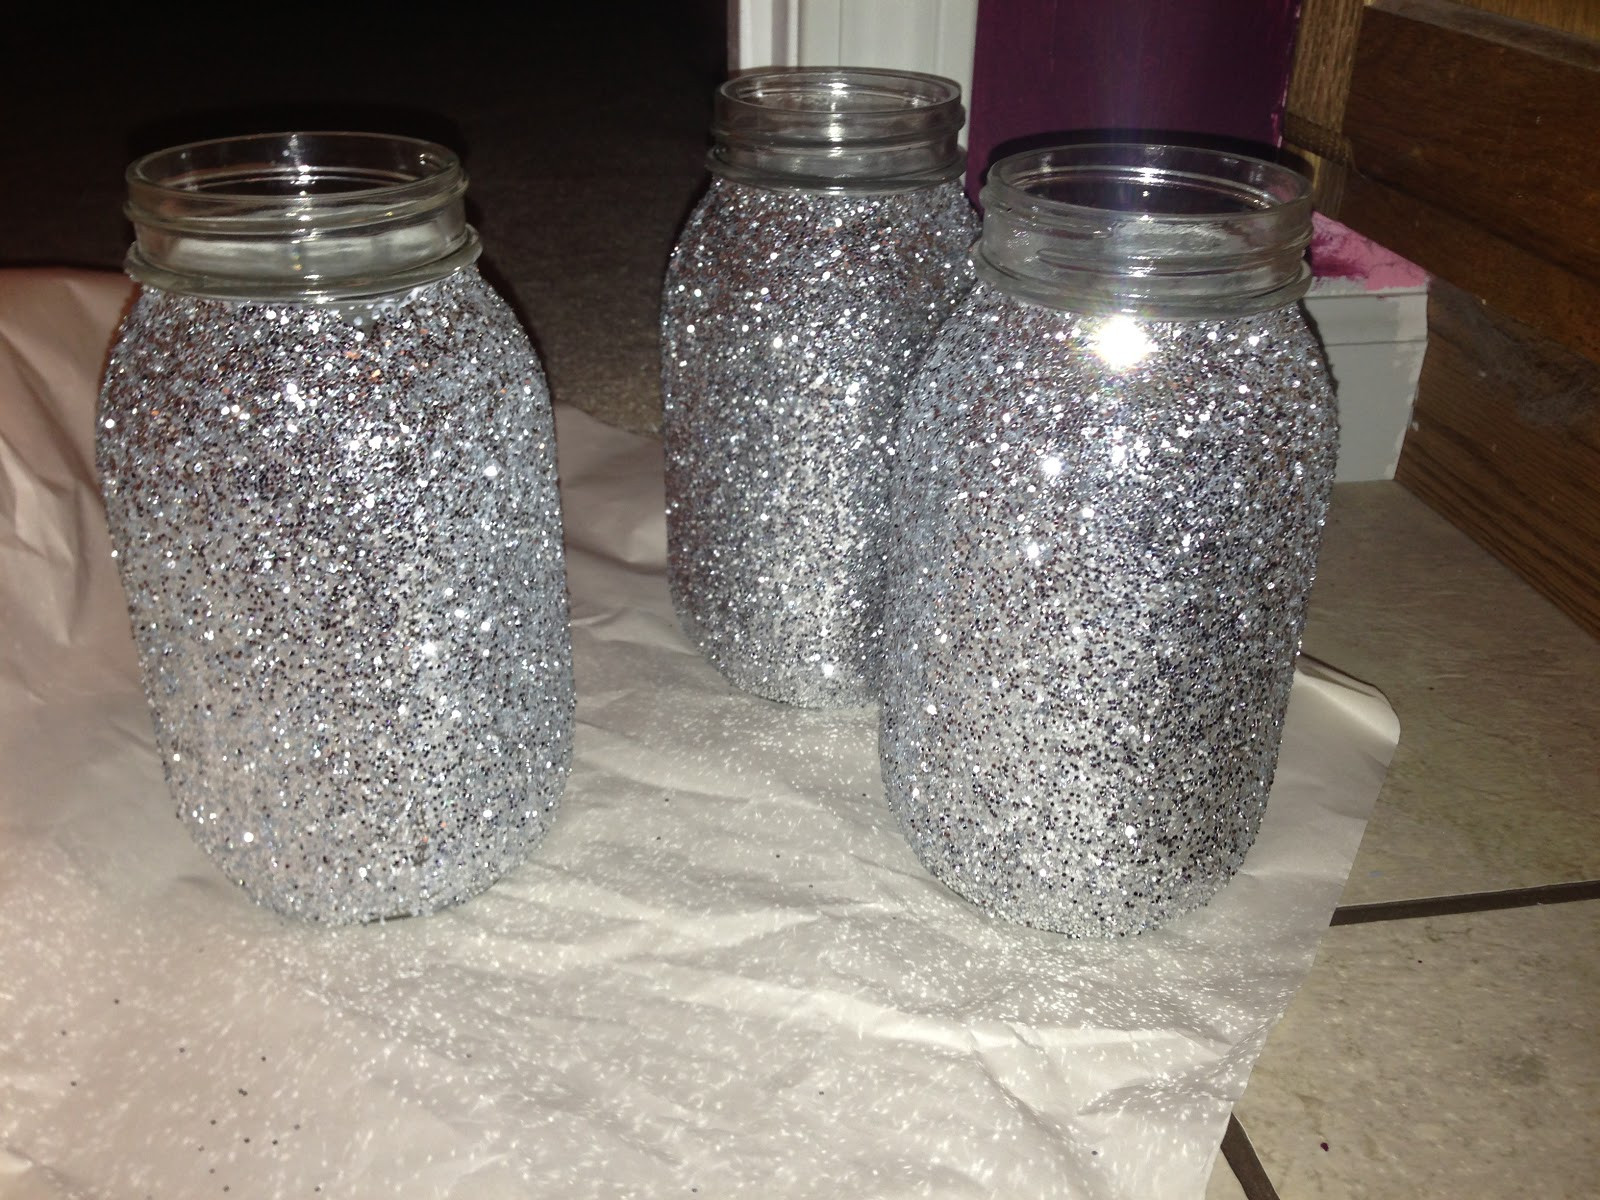 Best ideas about DIY Glitter Jar
. Save or Pin Like A Dime DIY Glitter Mason Jars Now.